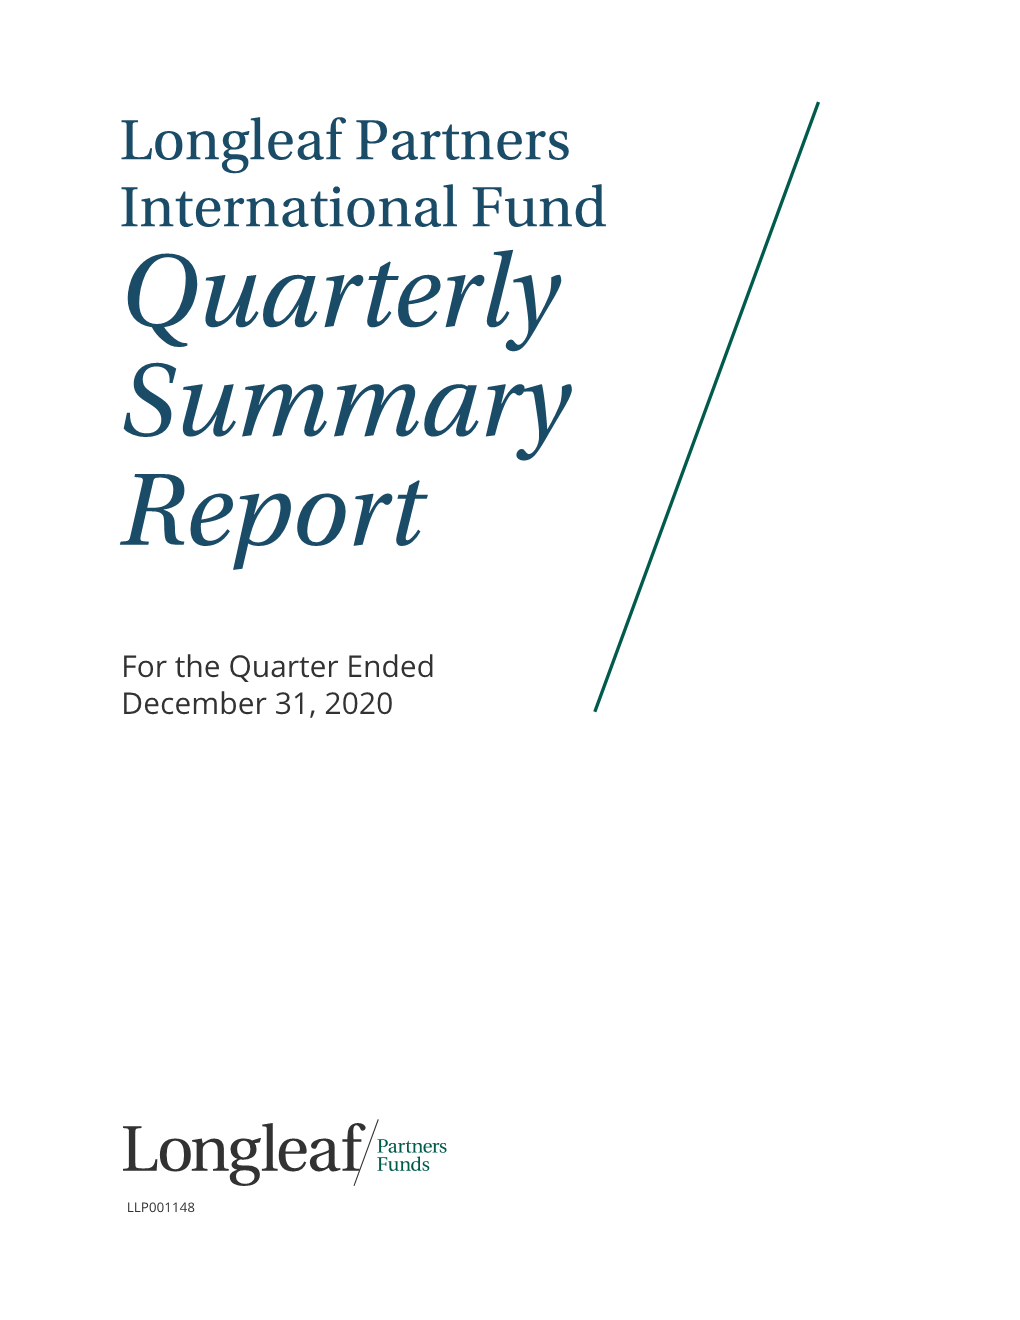 Longleaf Partners Quarterly Summary Report